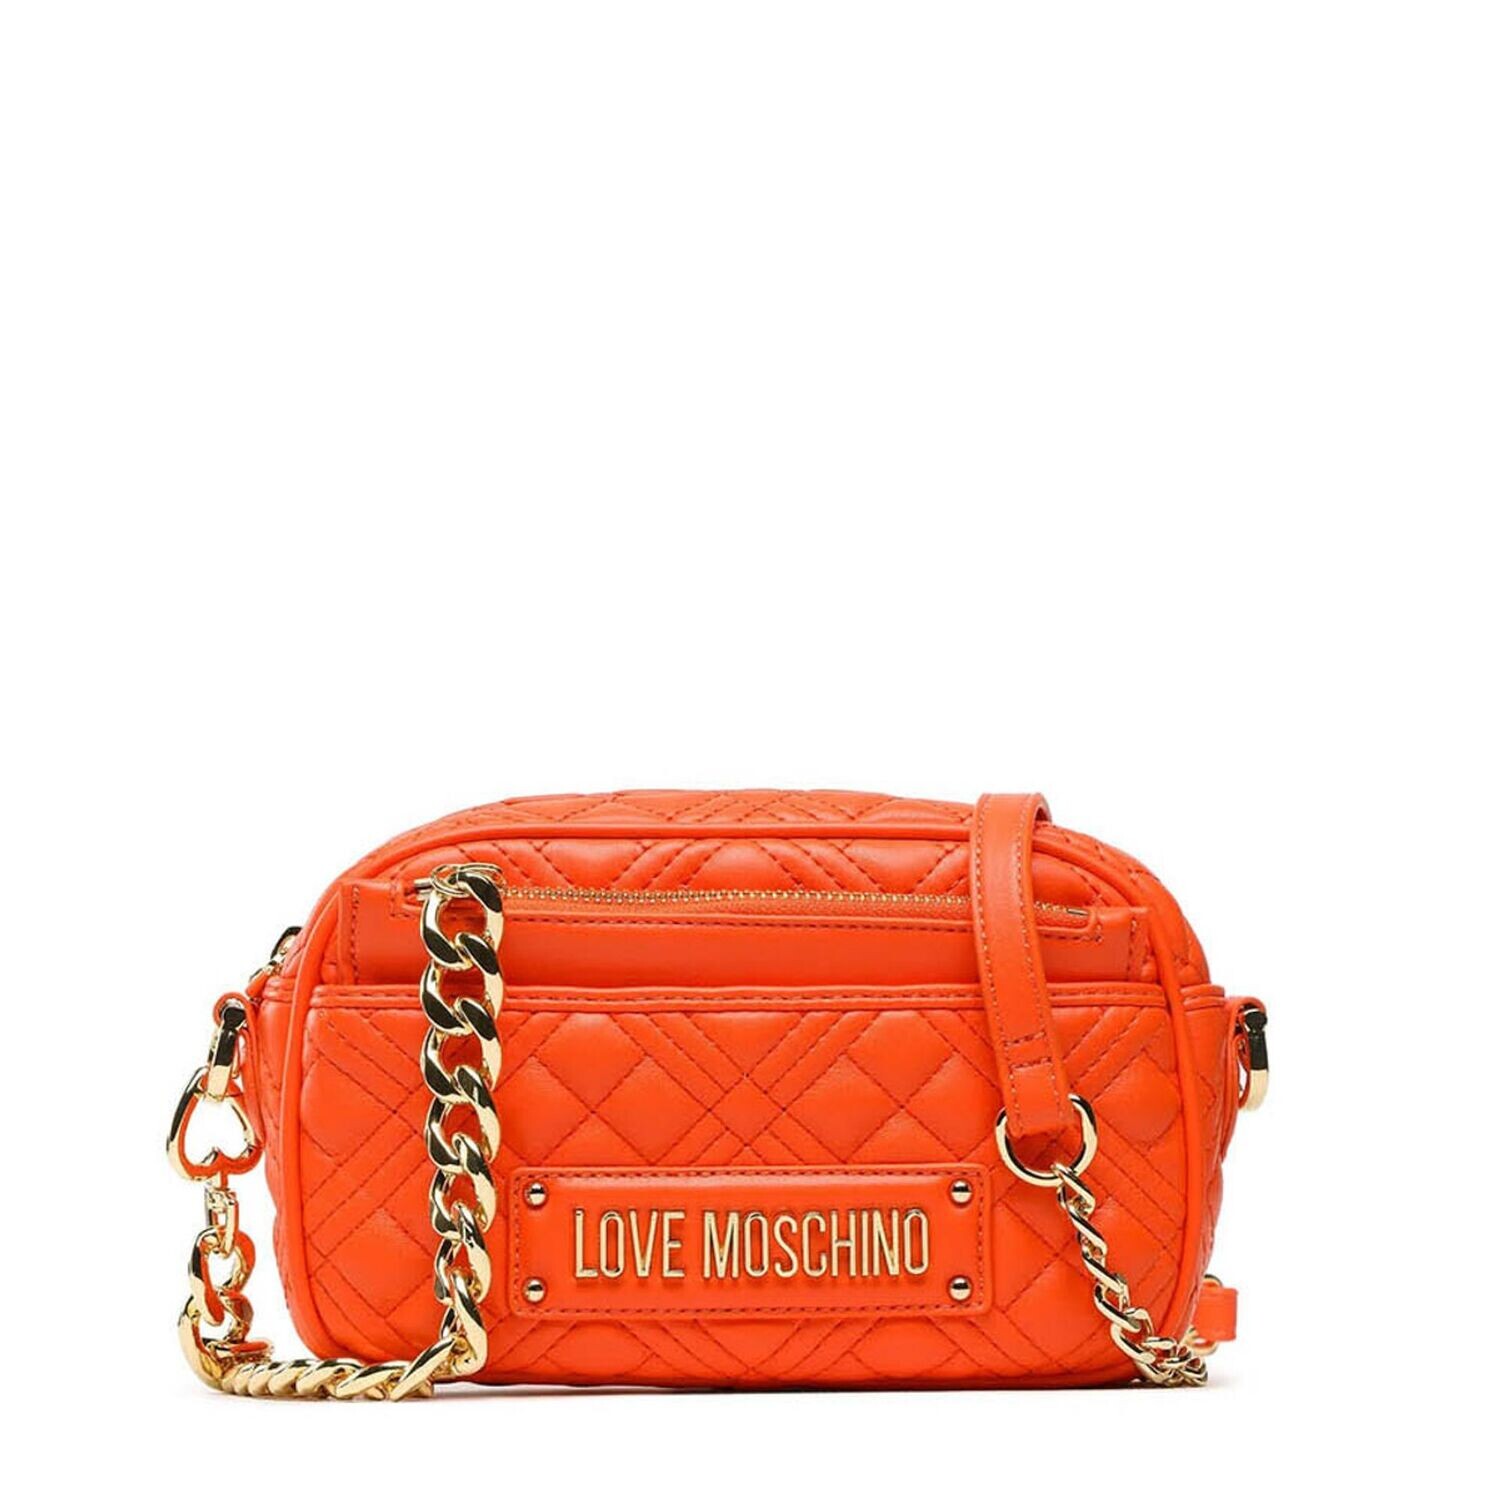 Love Moschino Patterned Orange Cross Body Bag